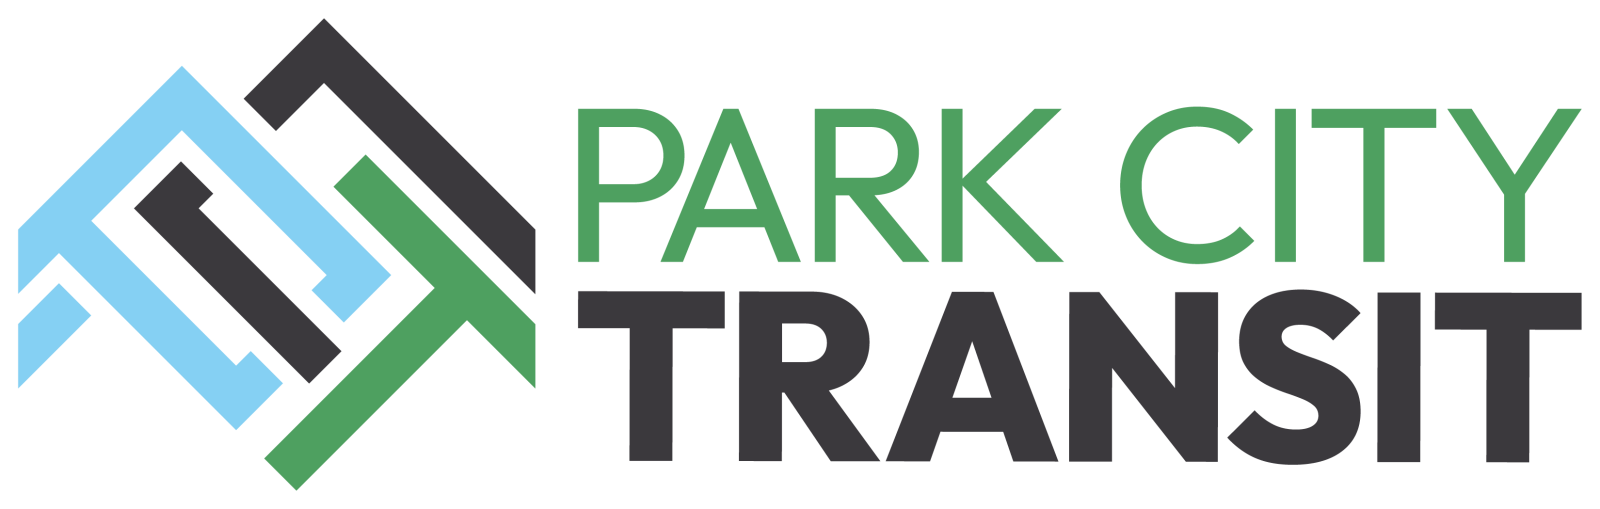 Park City Transit Horizontal Logo